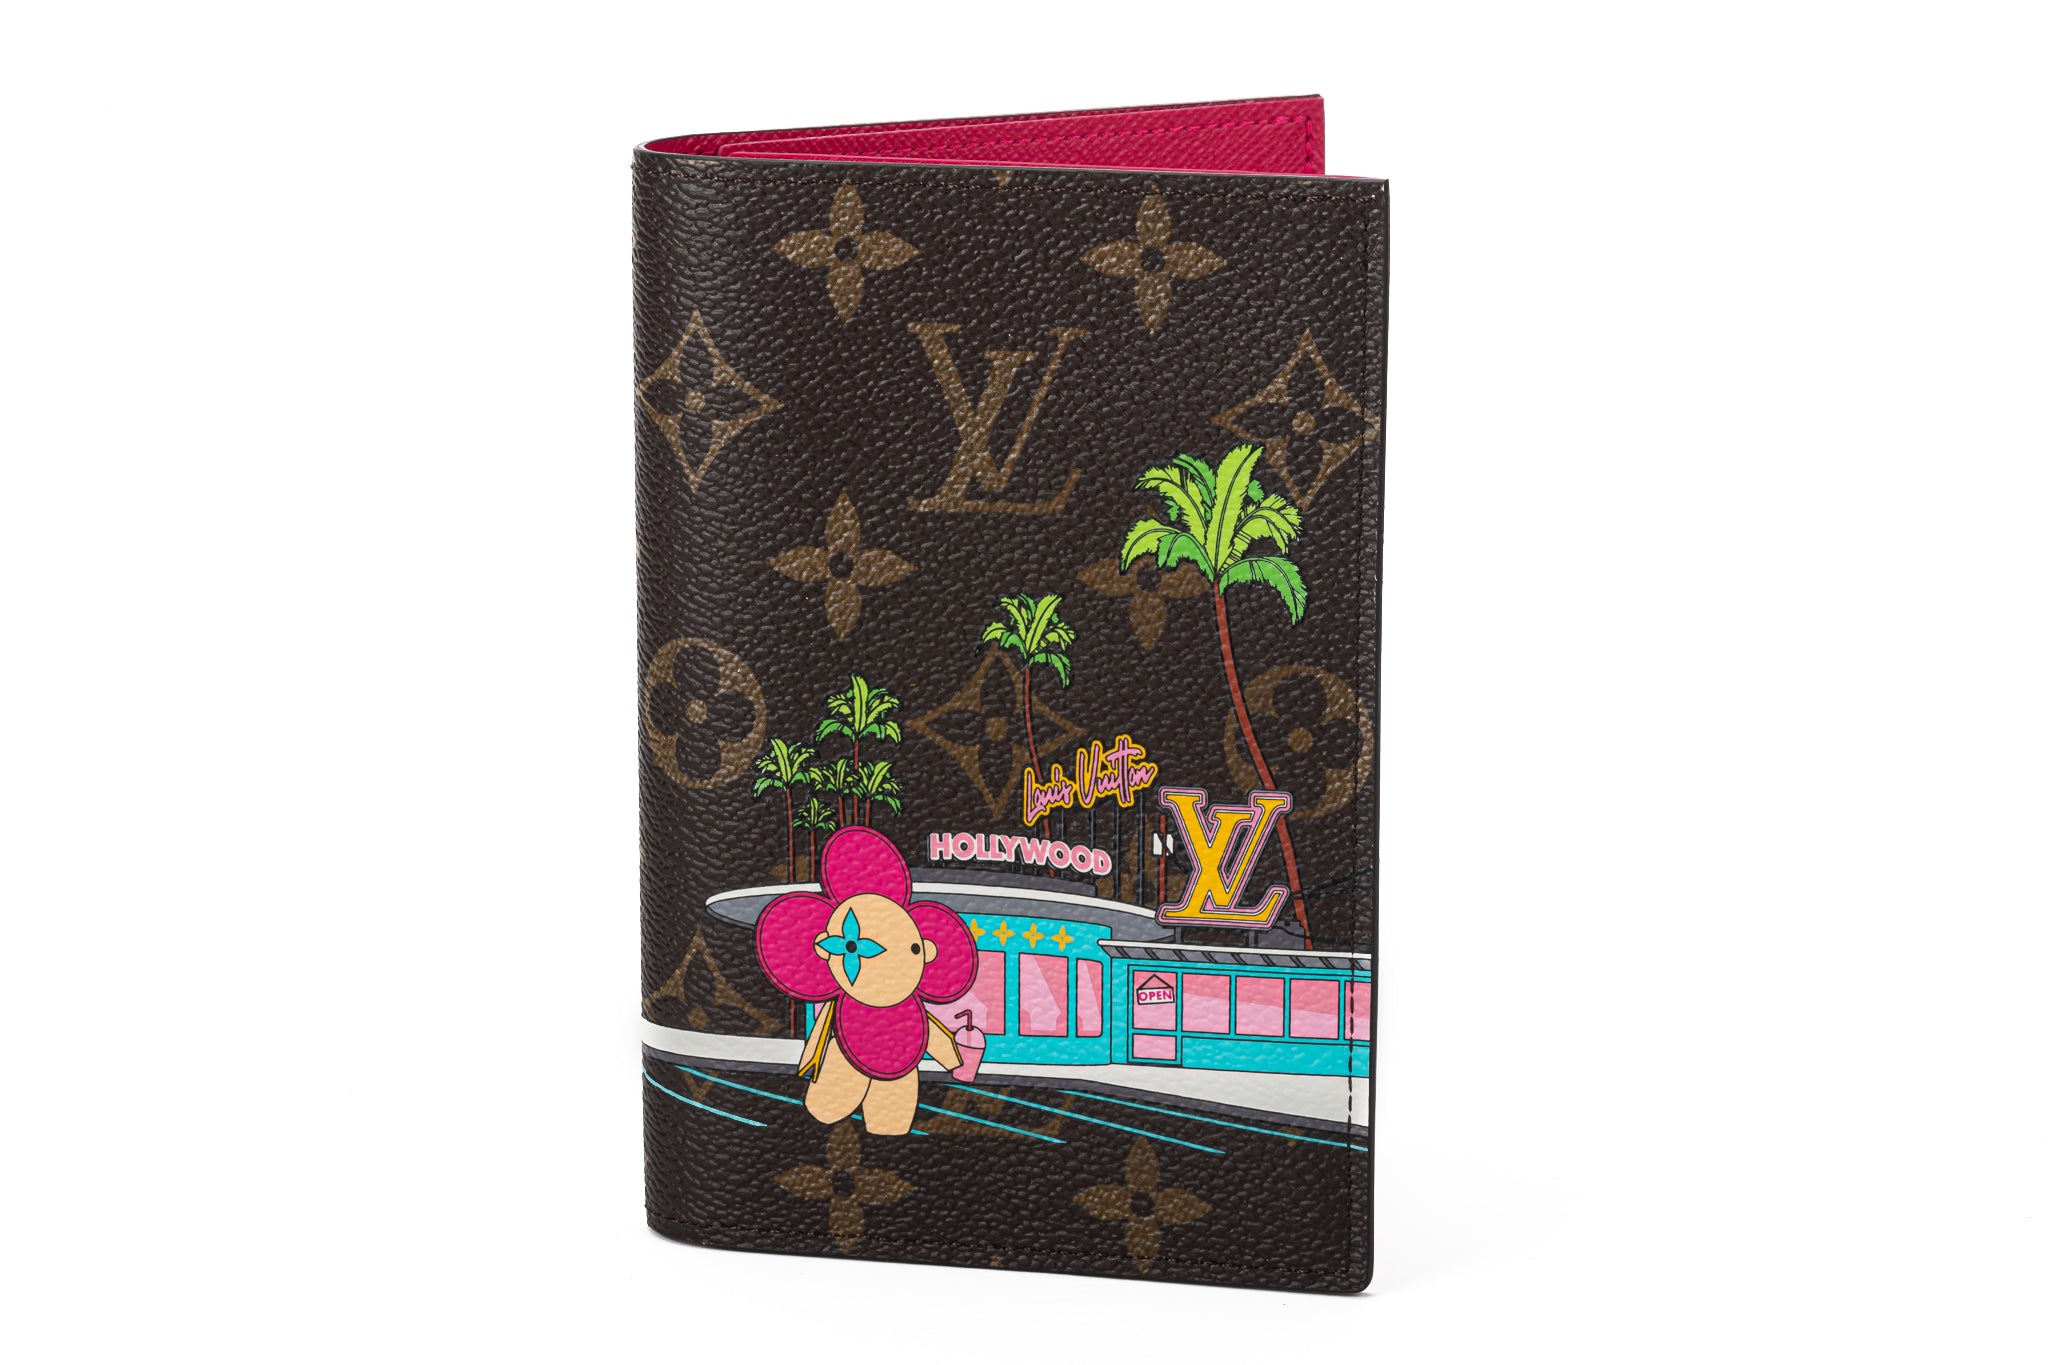 Louis Vuitton Passport Cover